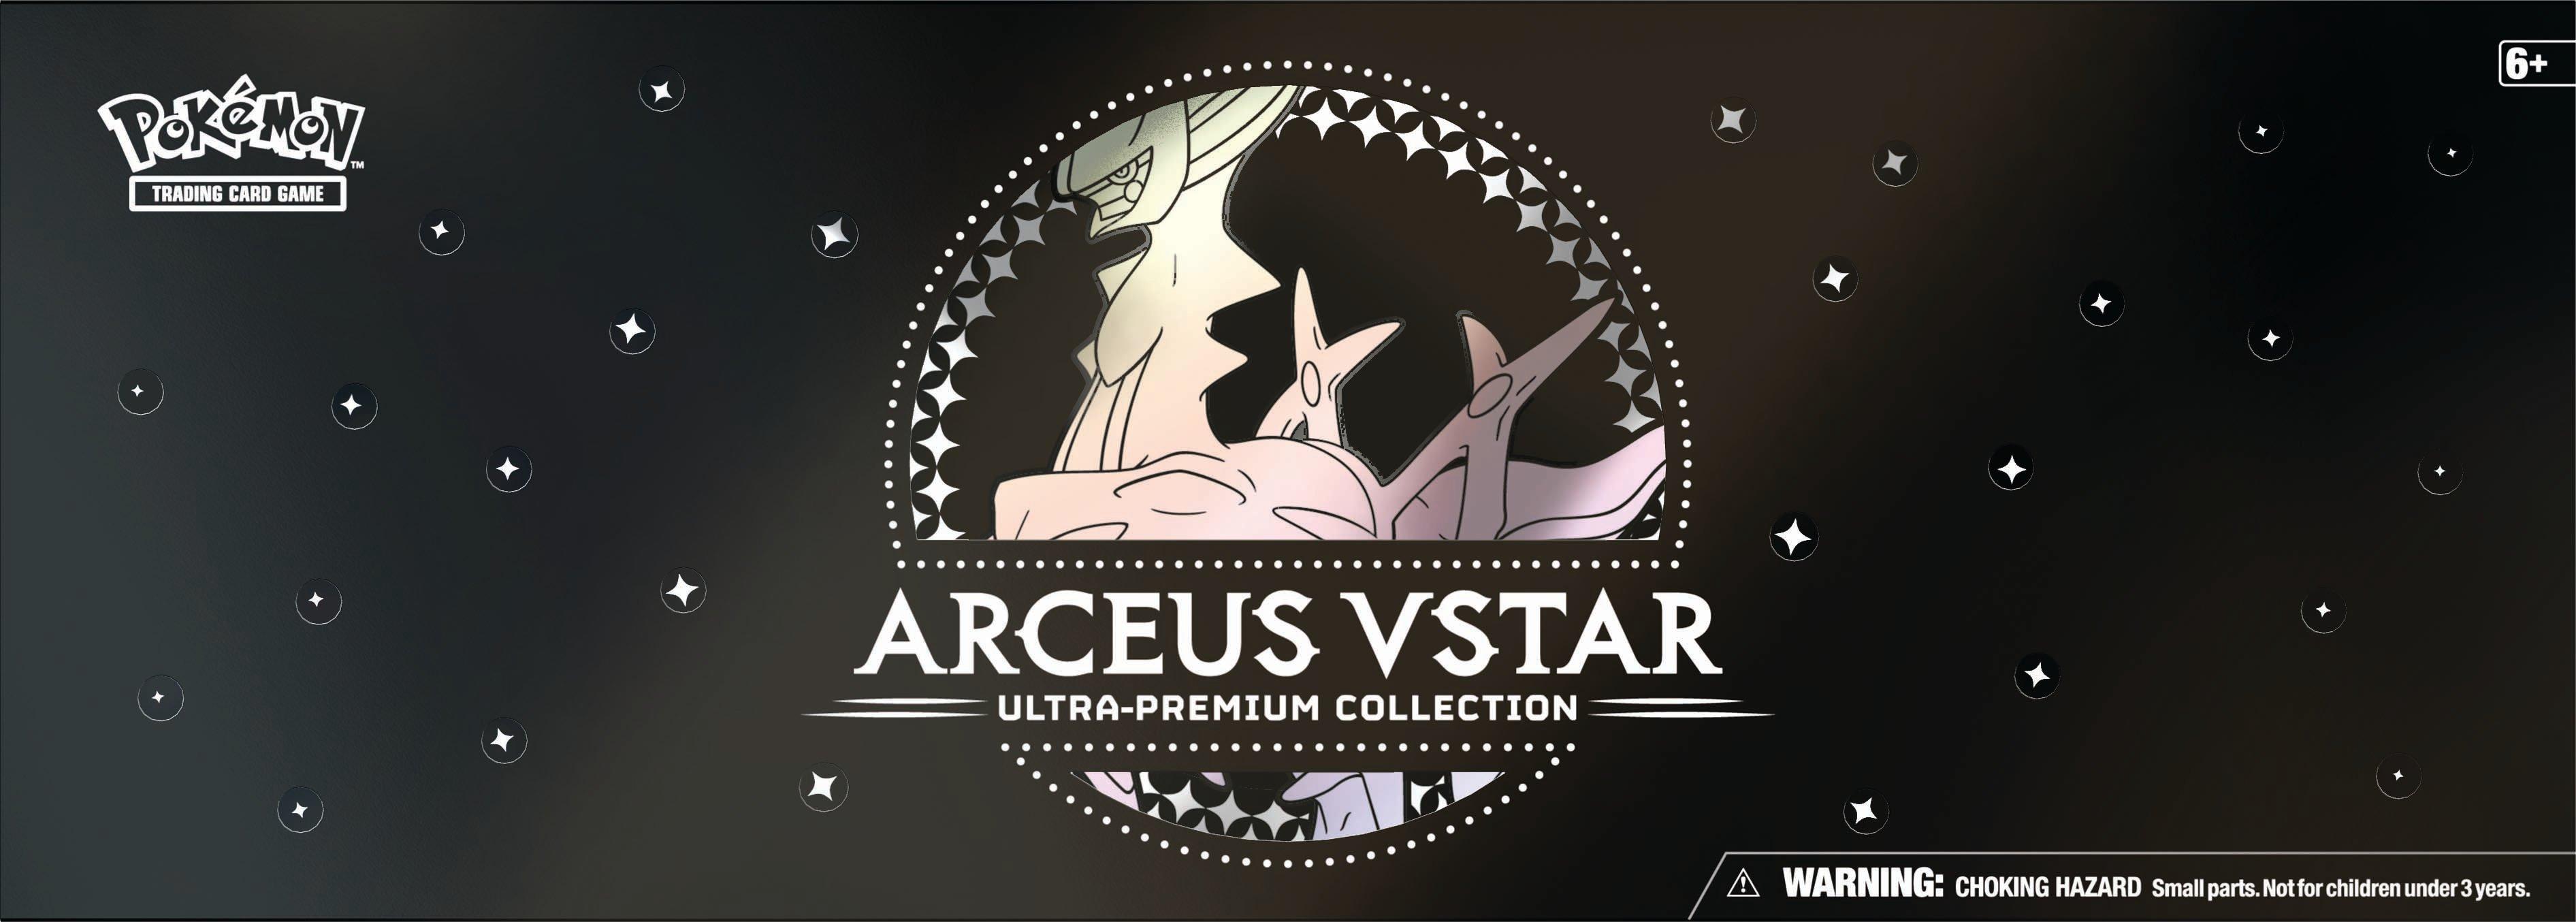 ARCEUS X V3.1.0 RELEASED!!!!!!!!! 